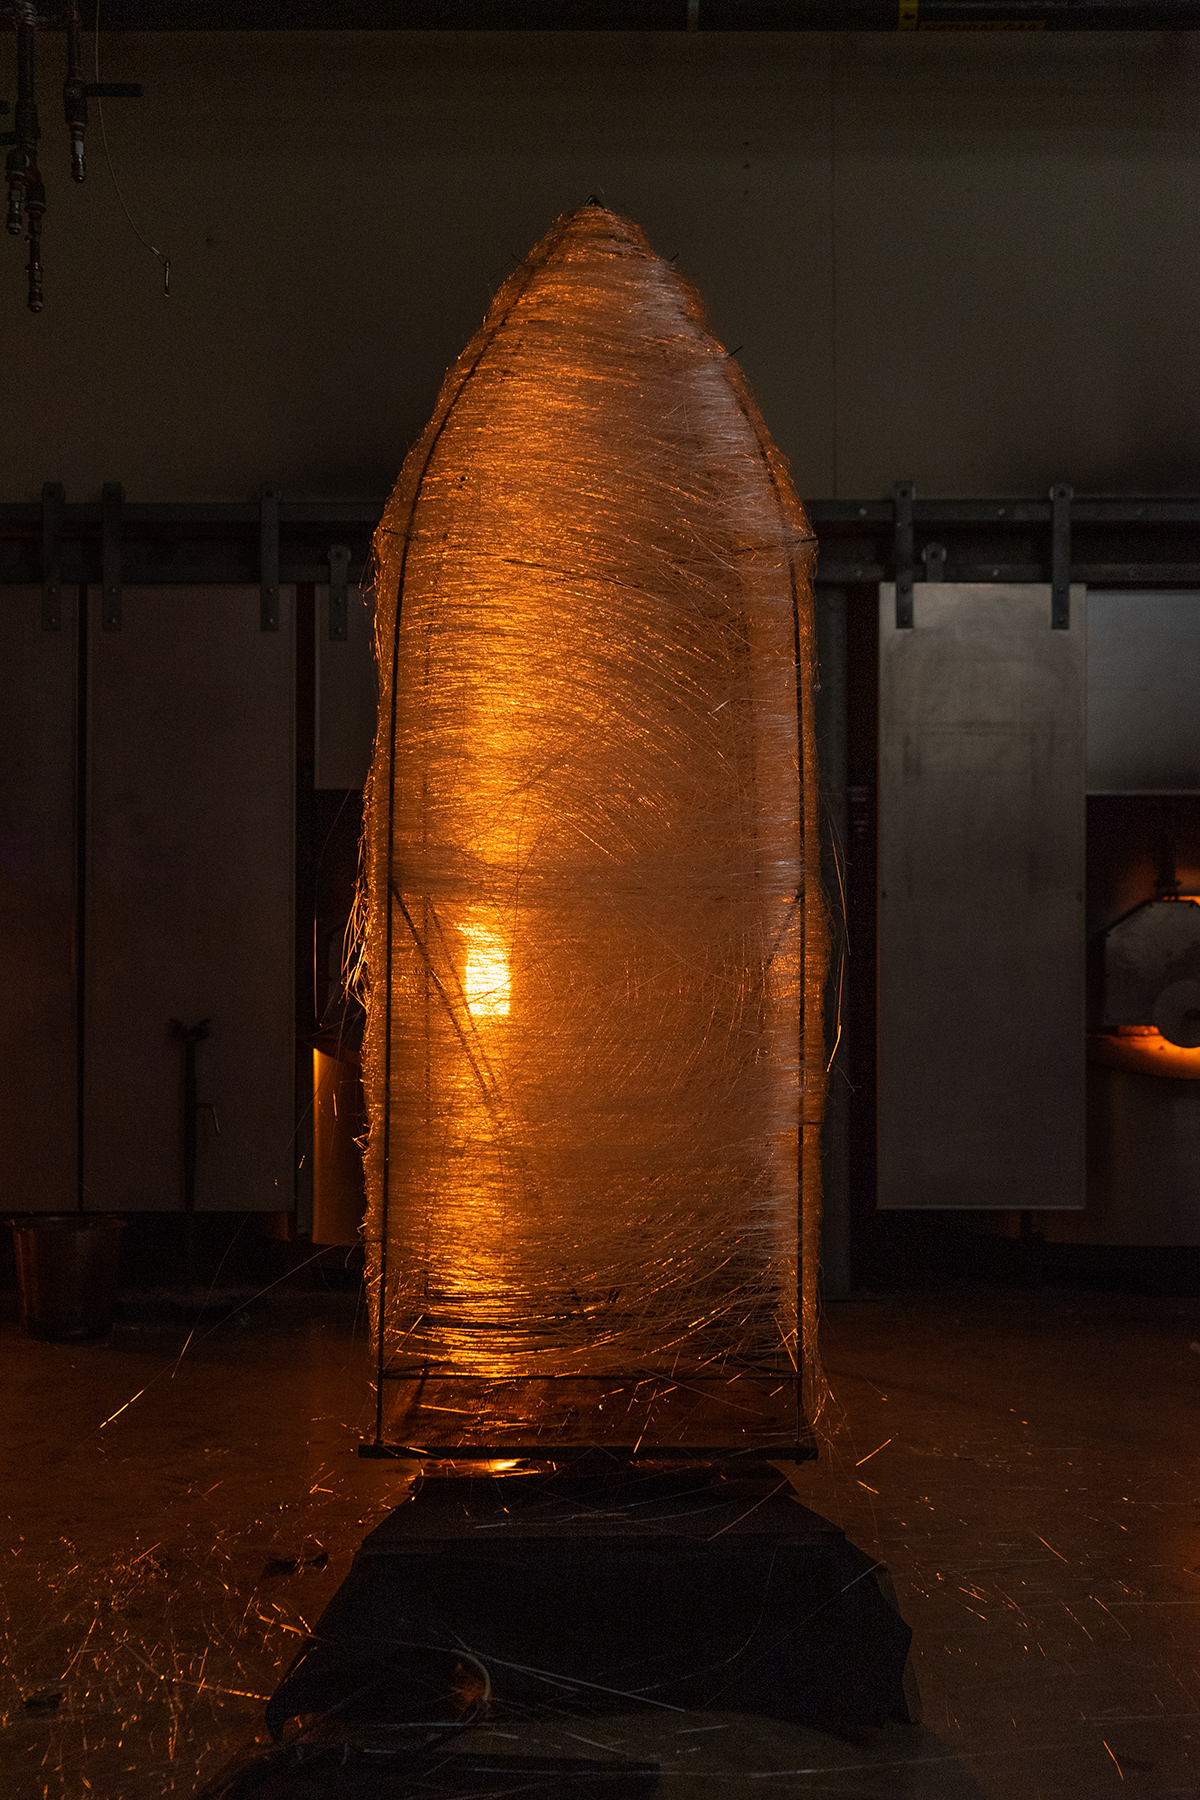 A large, woven glass sculpture.